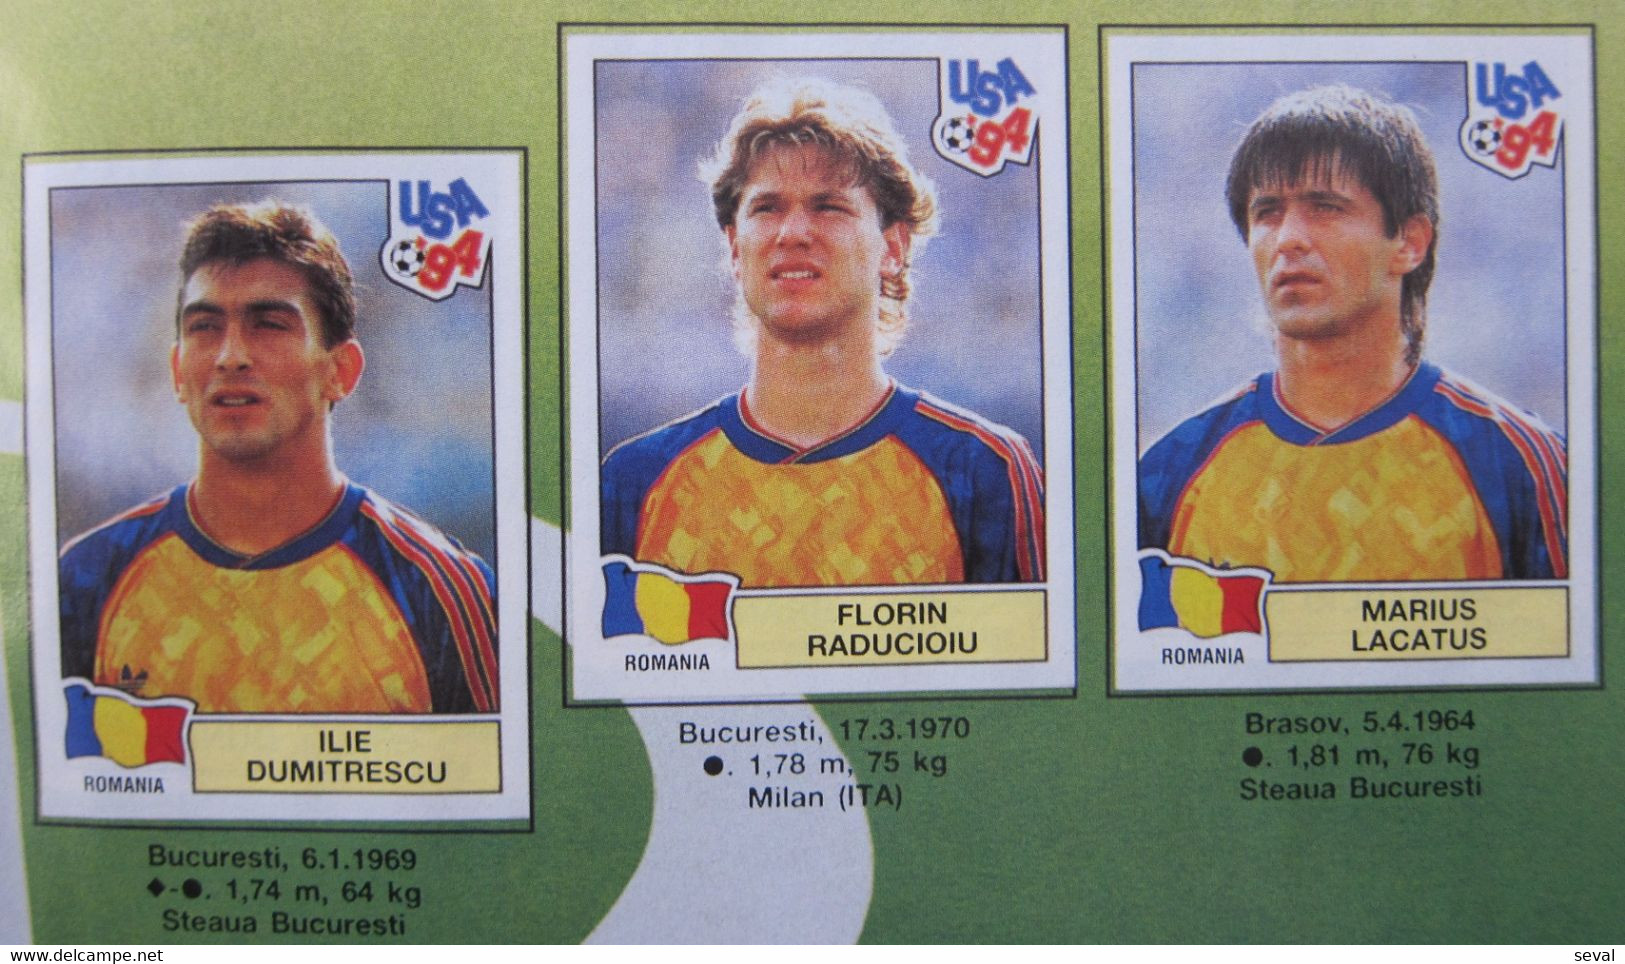 Panini USA 1994 Mundial Football Album Rare Reproduction pls see DESCRIPTION